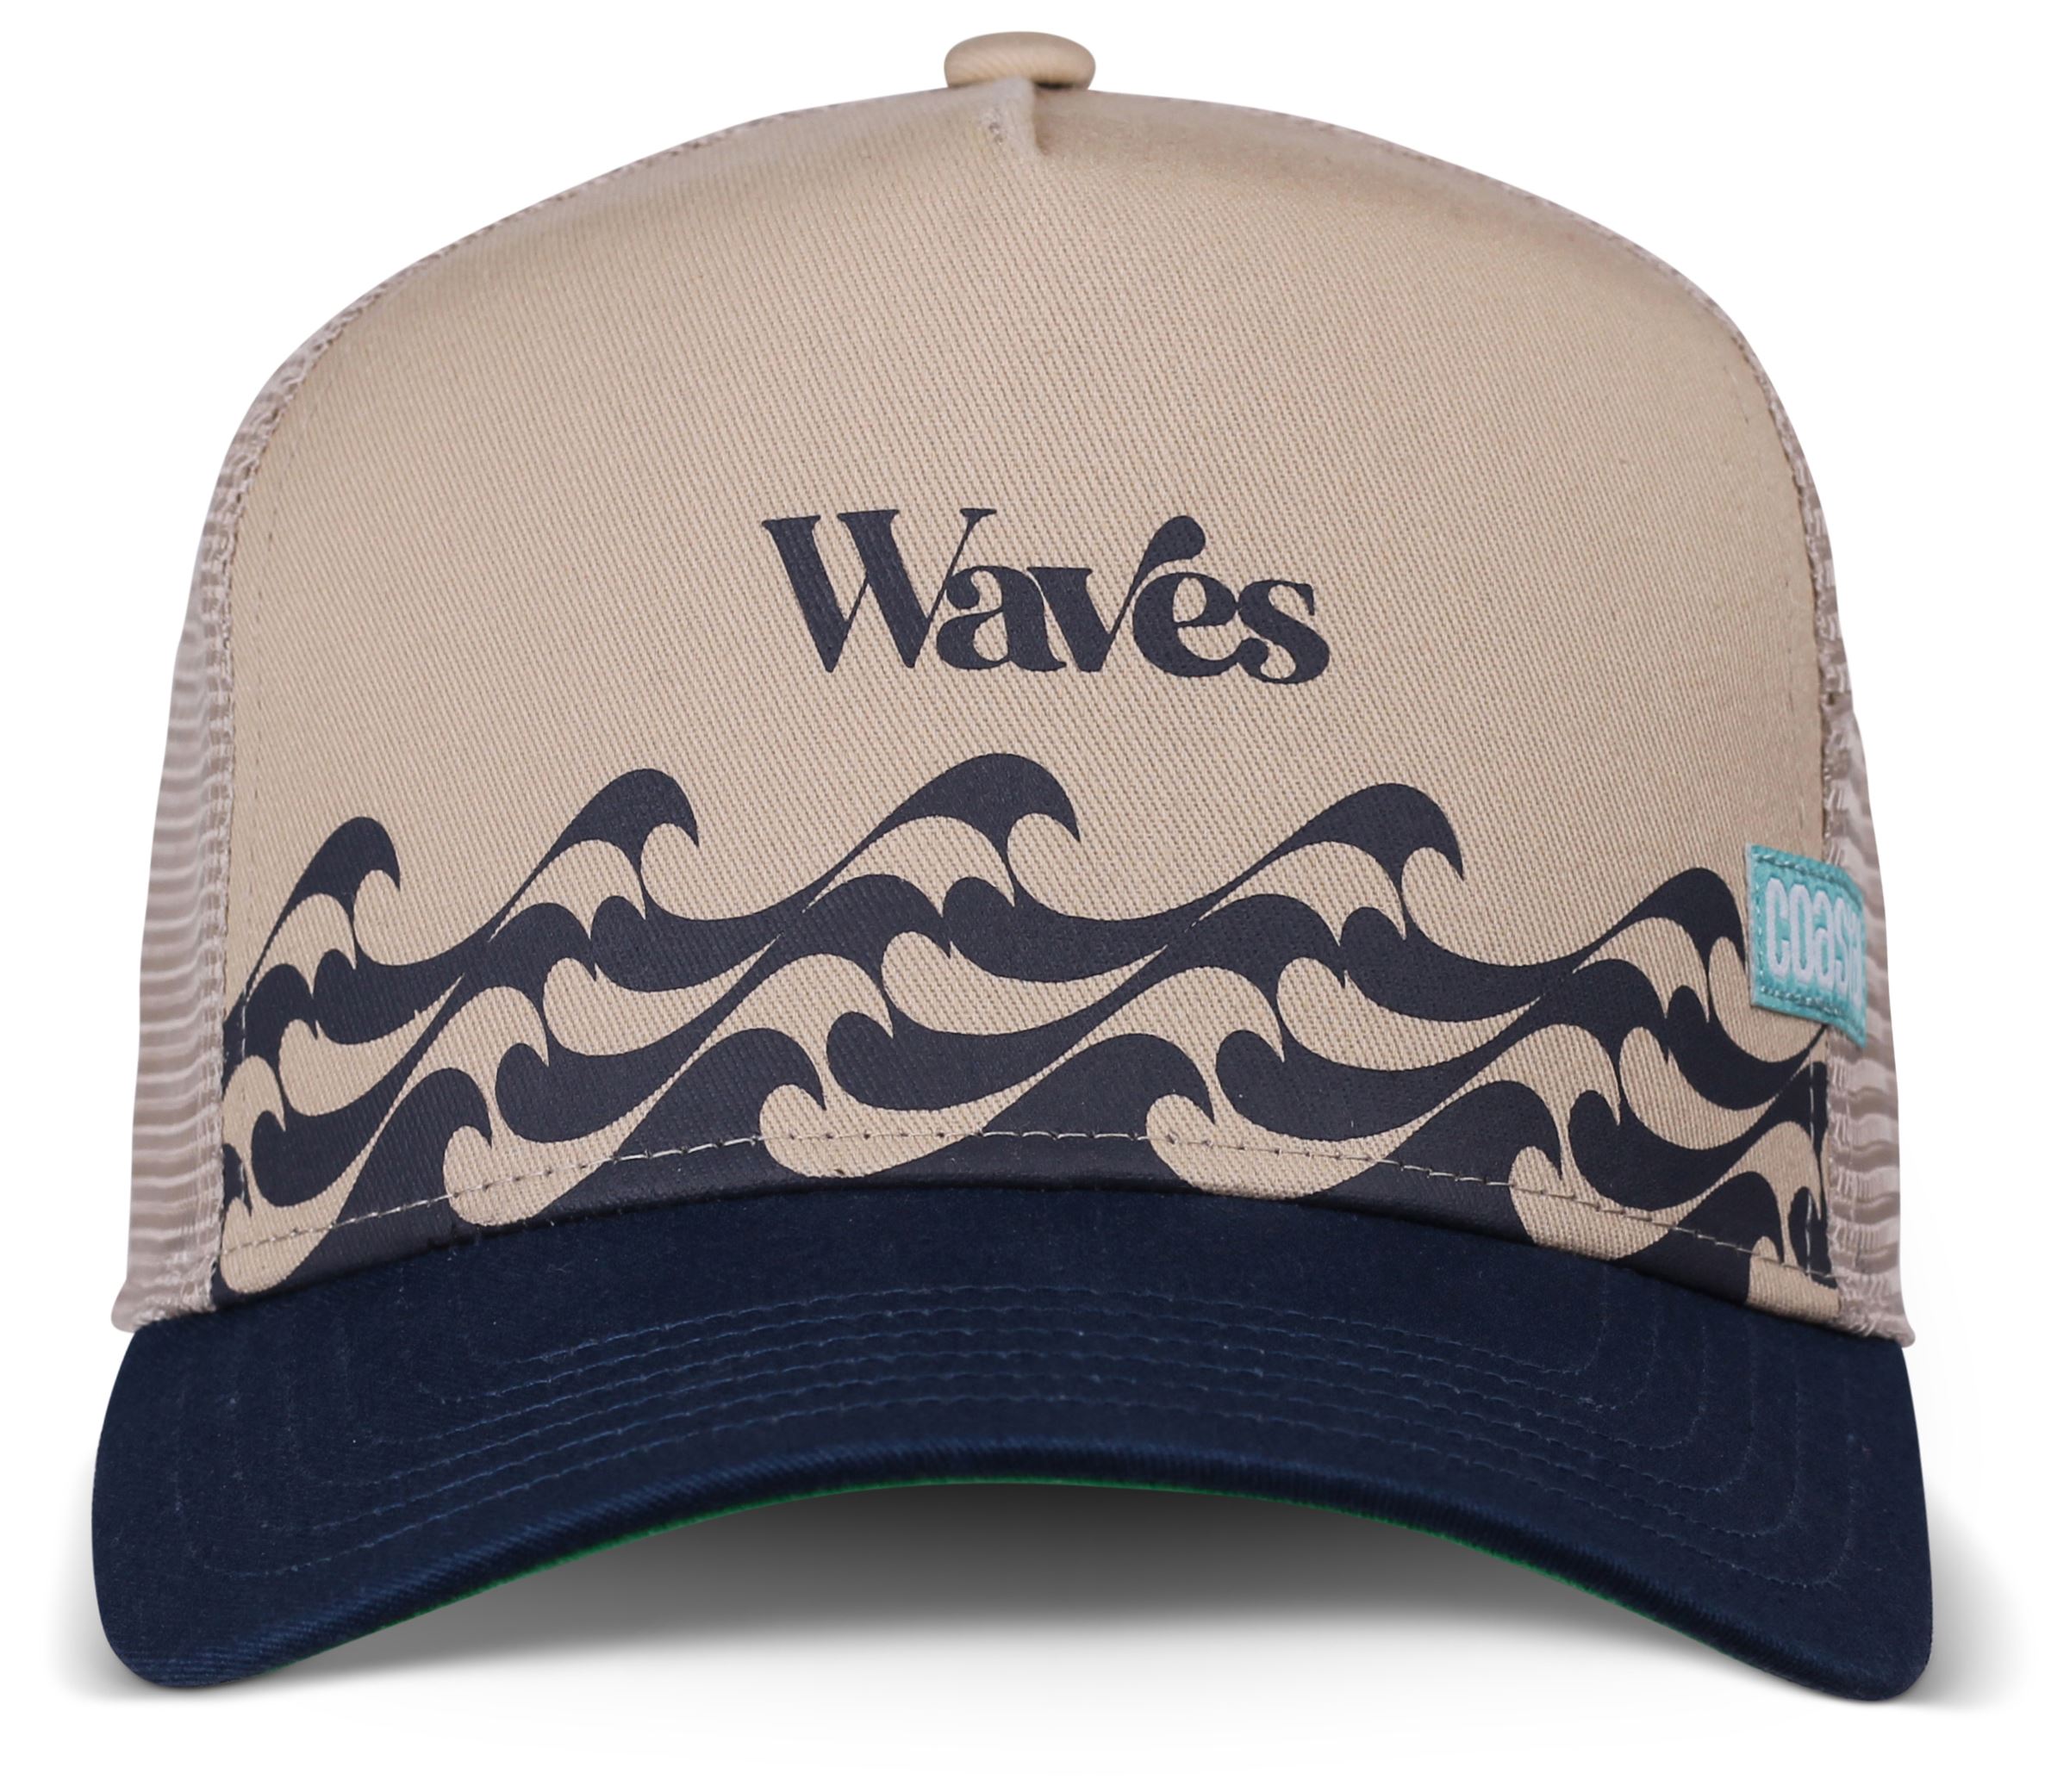 Bauhaus Wave Sand / Navy Trucker Cap Coastal